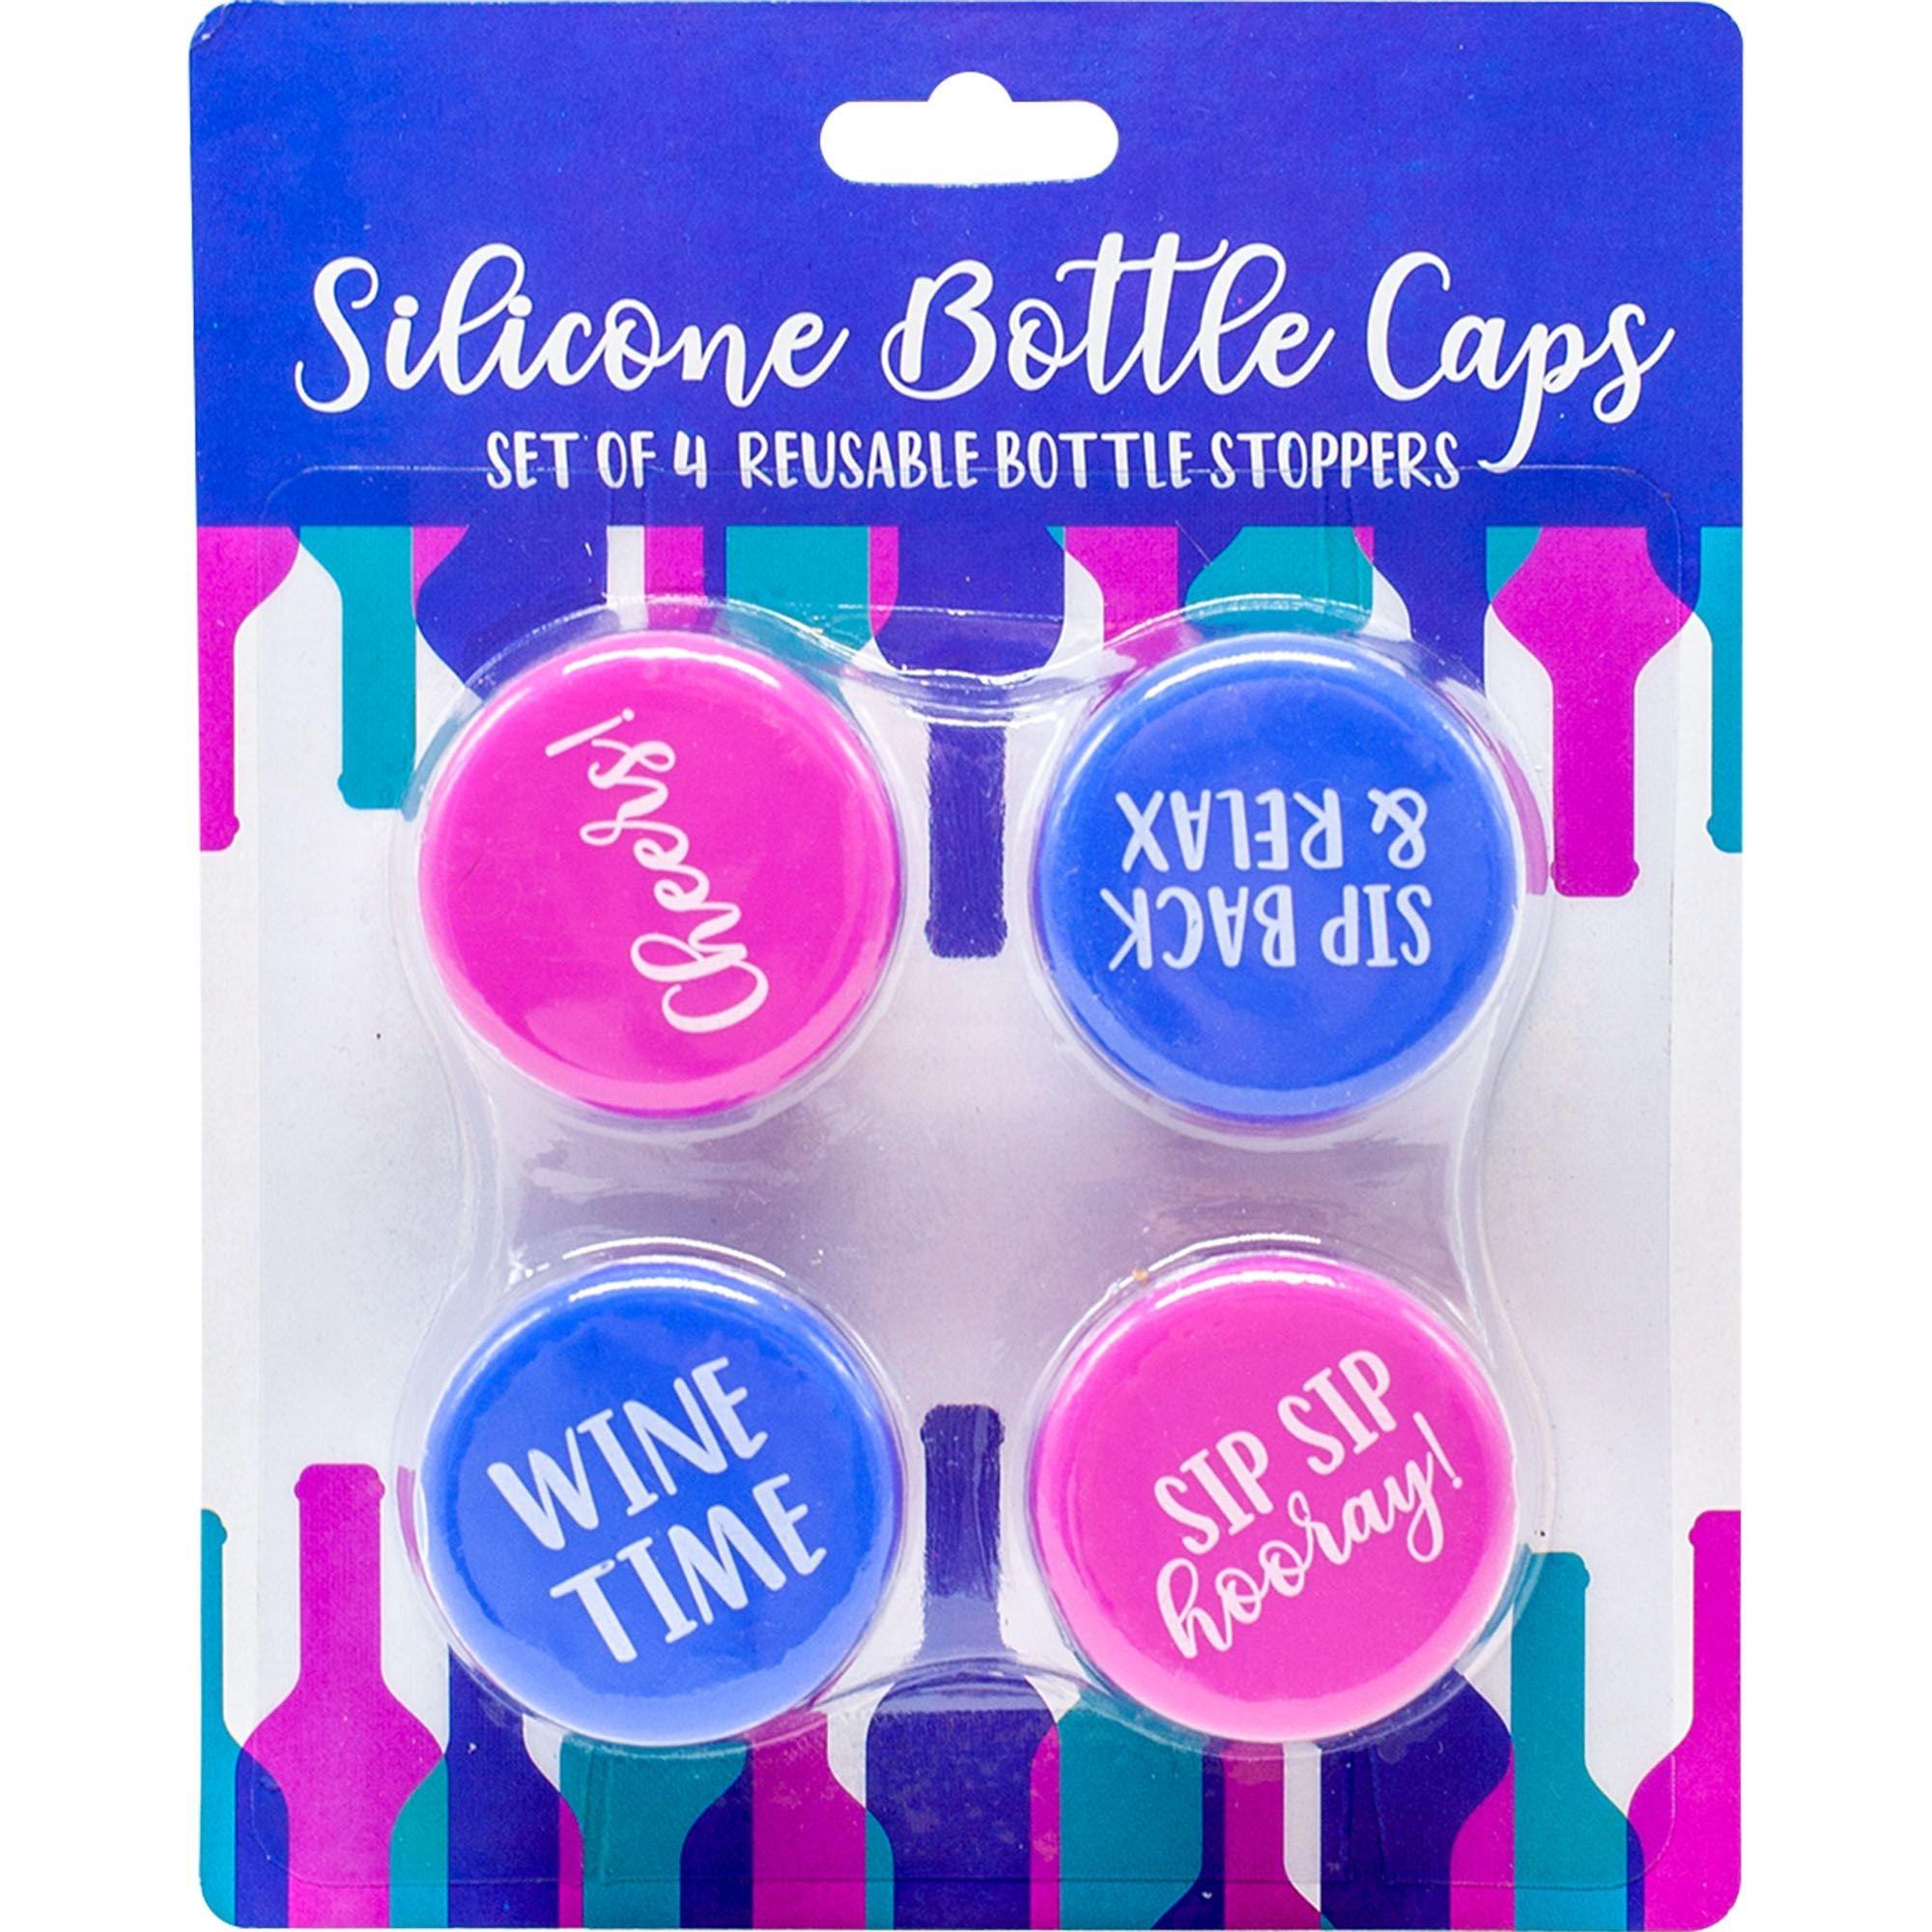 Flavor-Infused Bottle Caps : Keepable Cap